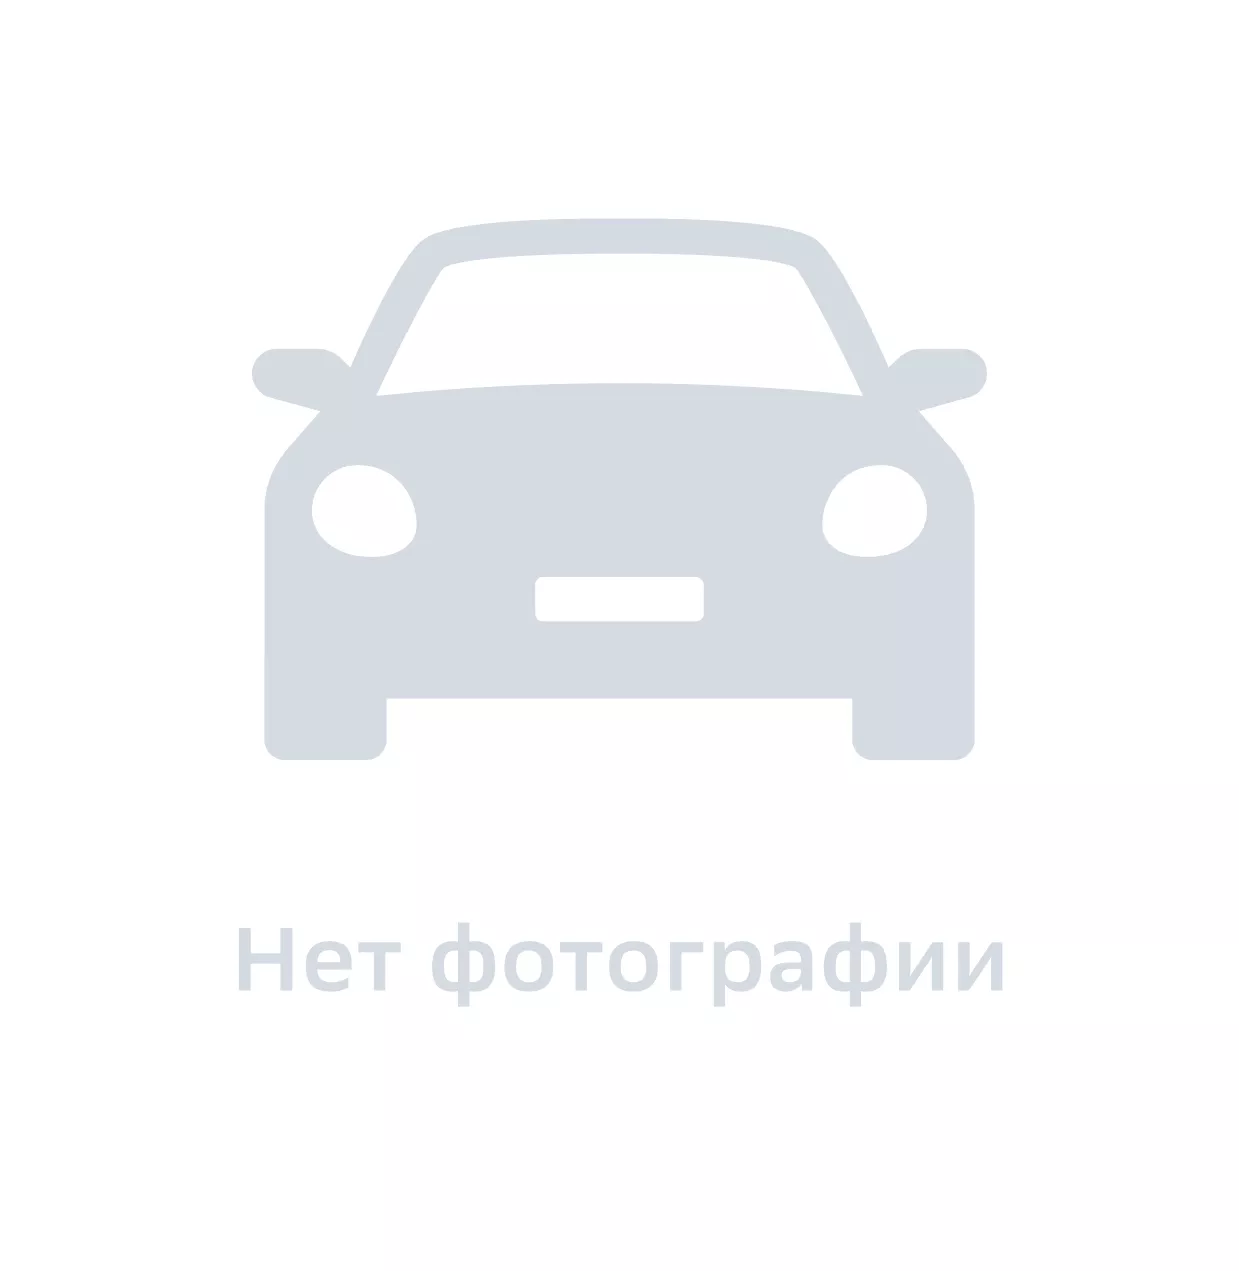 Шайба автомобильная, GM DAT, 94525267, цена за 1 шт.